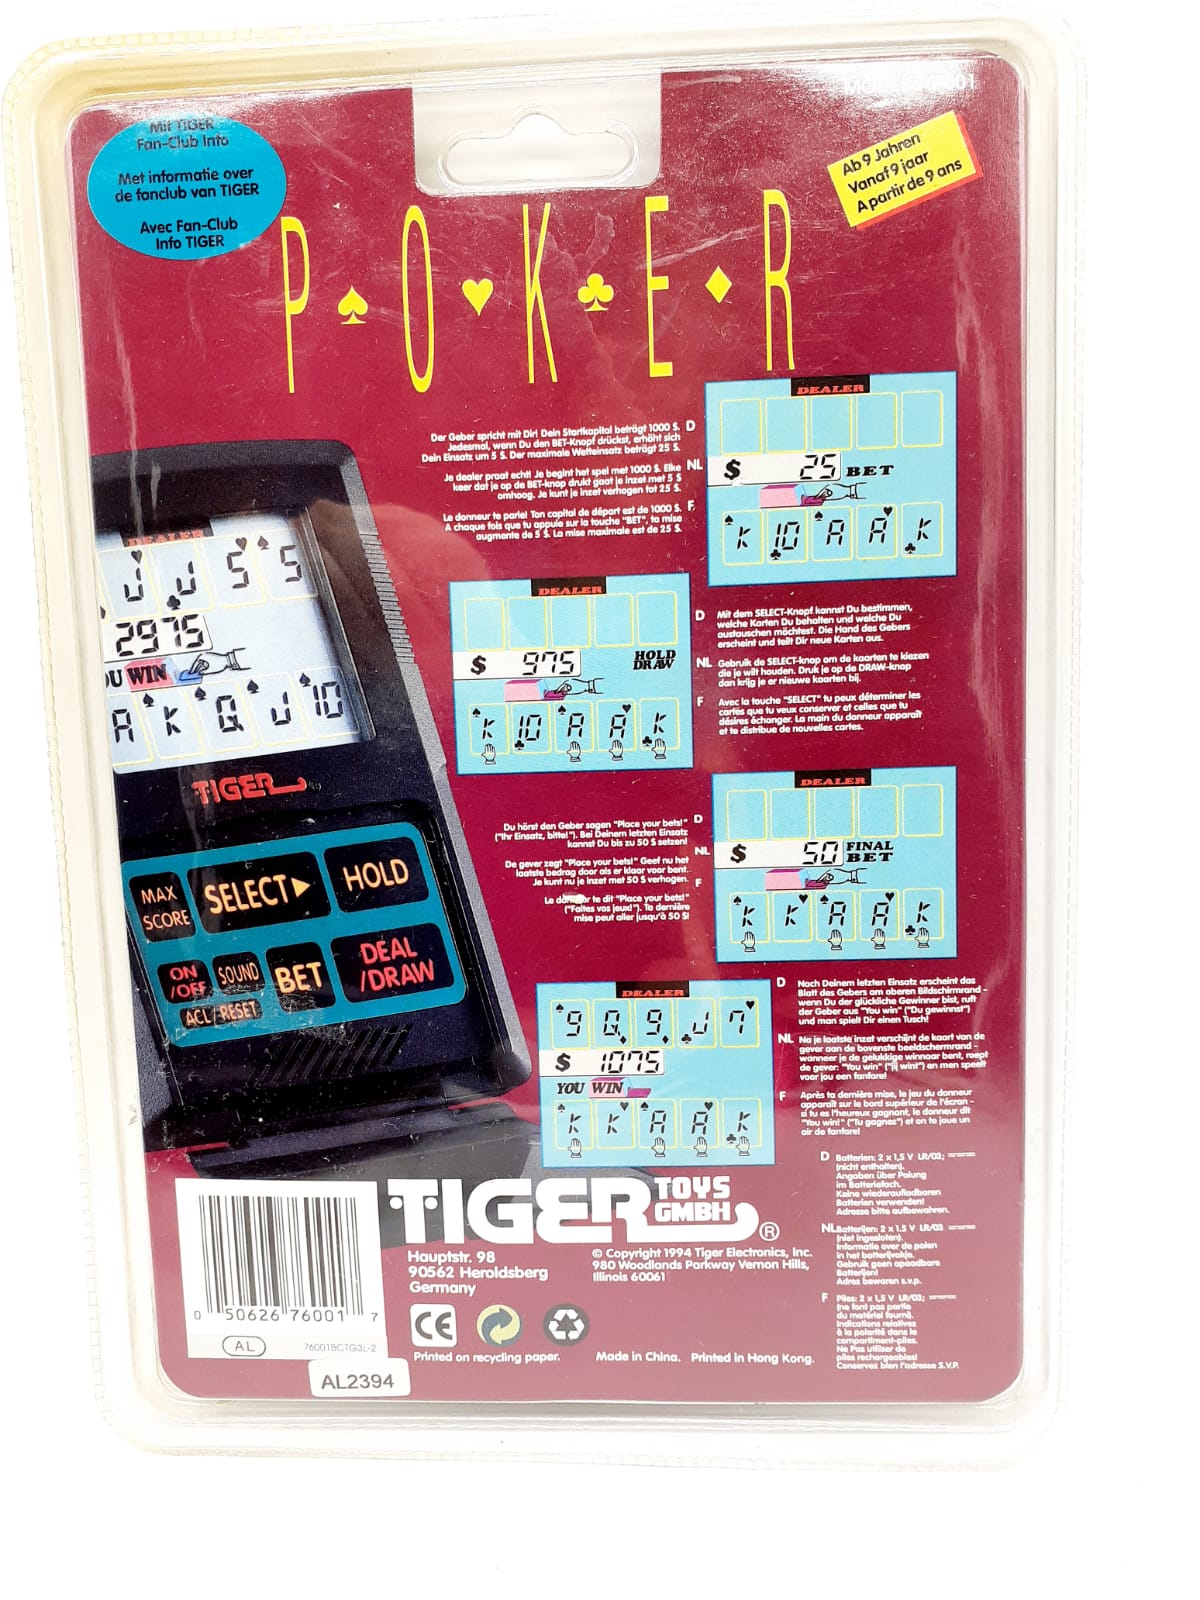 Poker  tiger electronics 1994